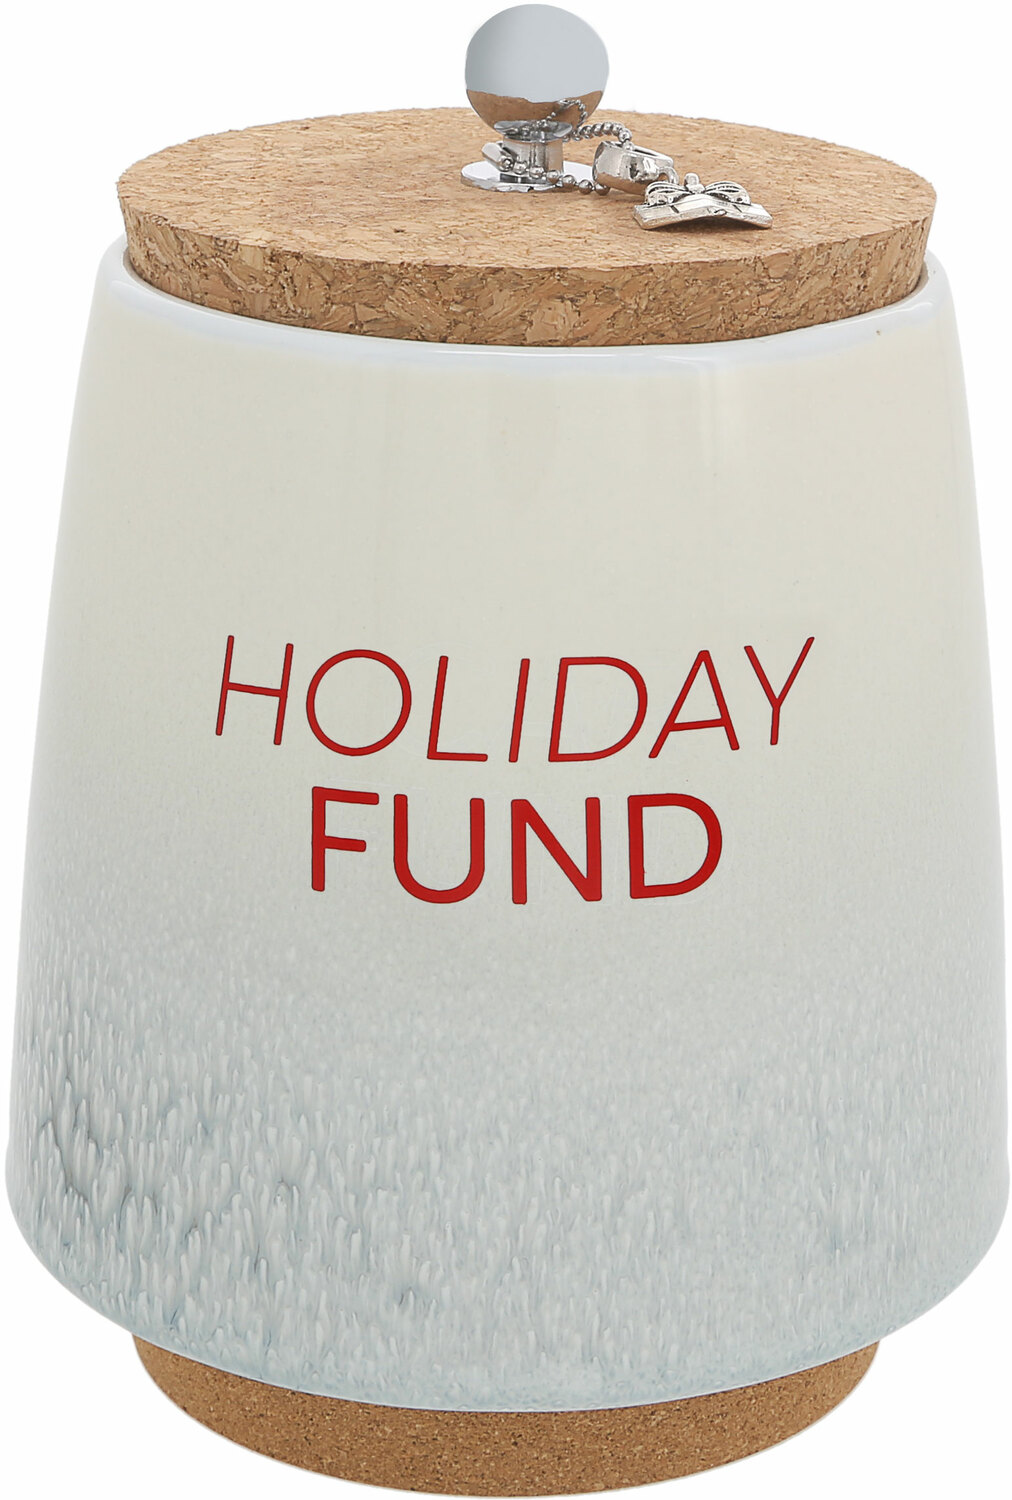 Holiday by So Much Fun-d - Holiday - 6.5" Ceramic Savings Bank